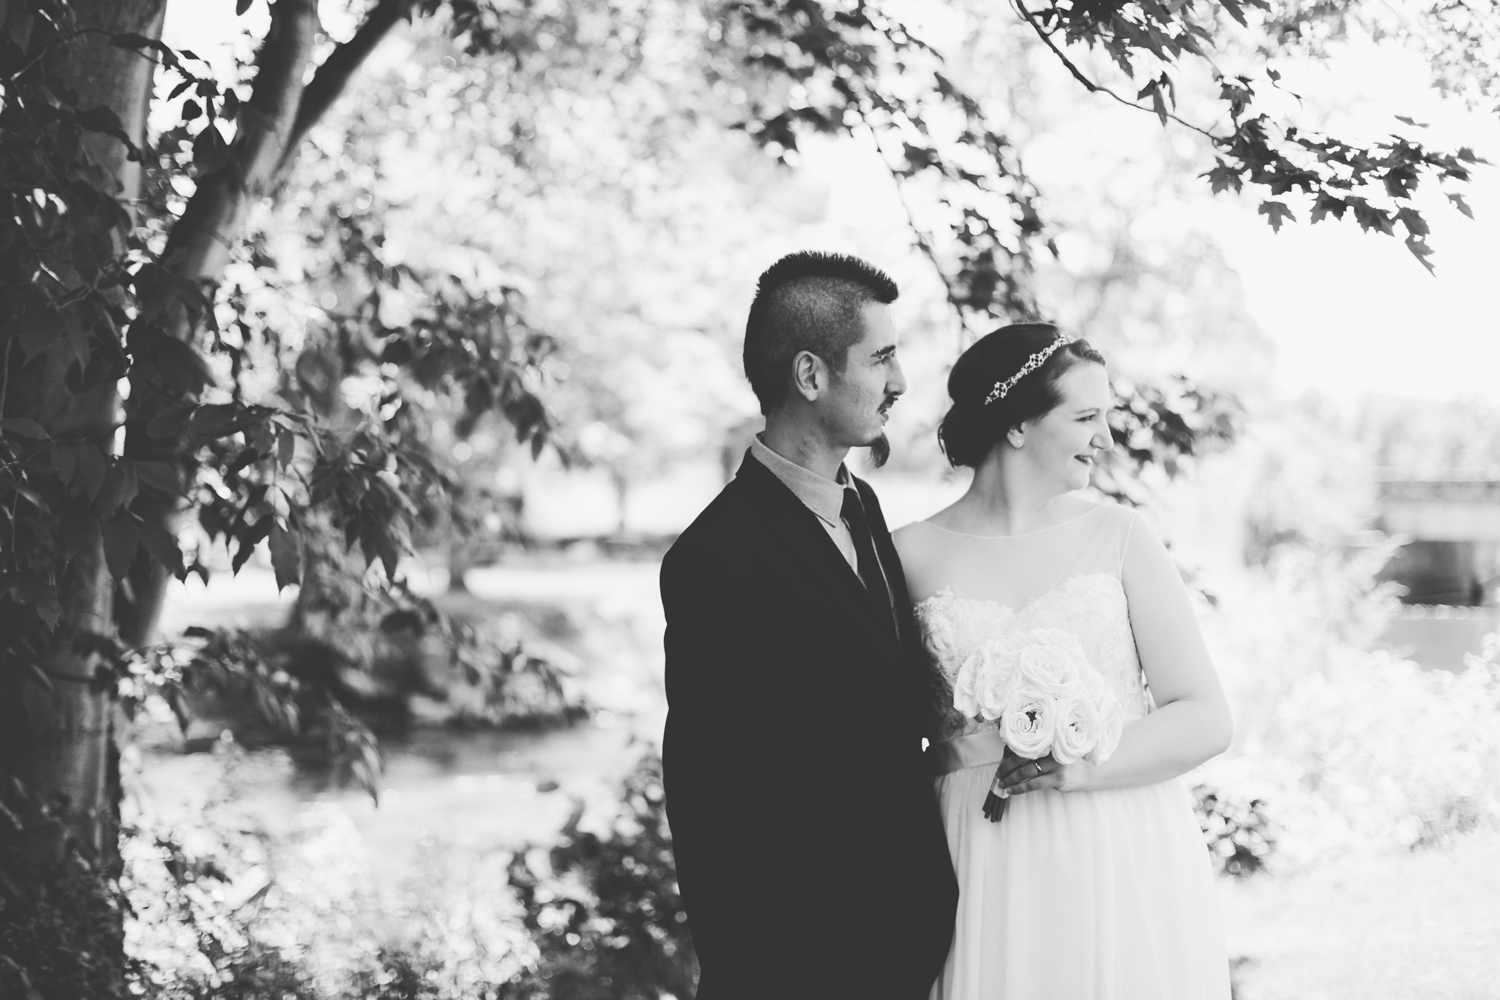 Jillian VanZytveld Photography - Michigan Lifestyle & Wedding Photography - 02.jpg